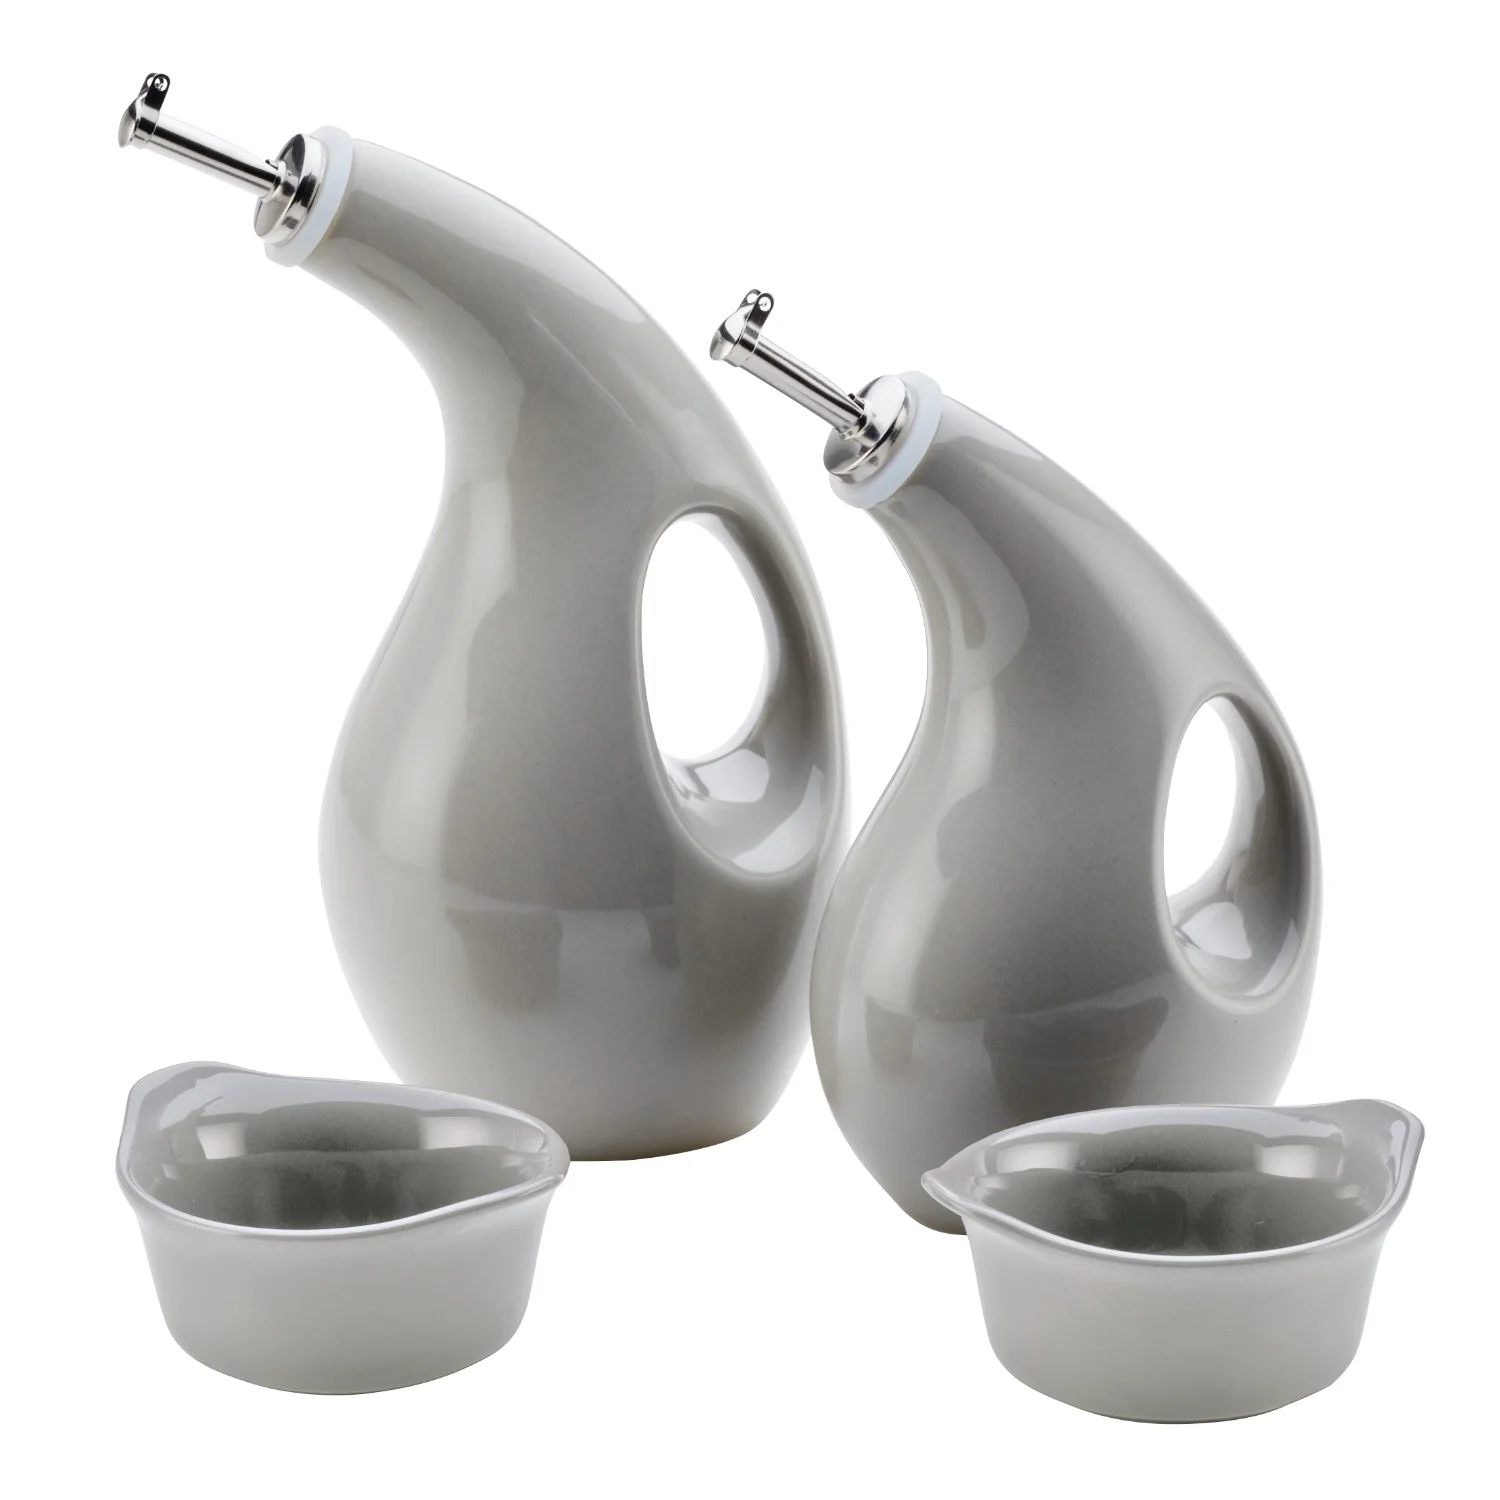 

Ceramics EVOO and Ramekin Dipper Set, 4-Piece, Light Sea Salt Gray salt shaker